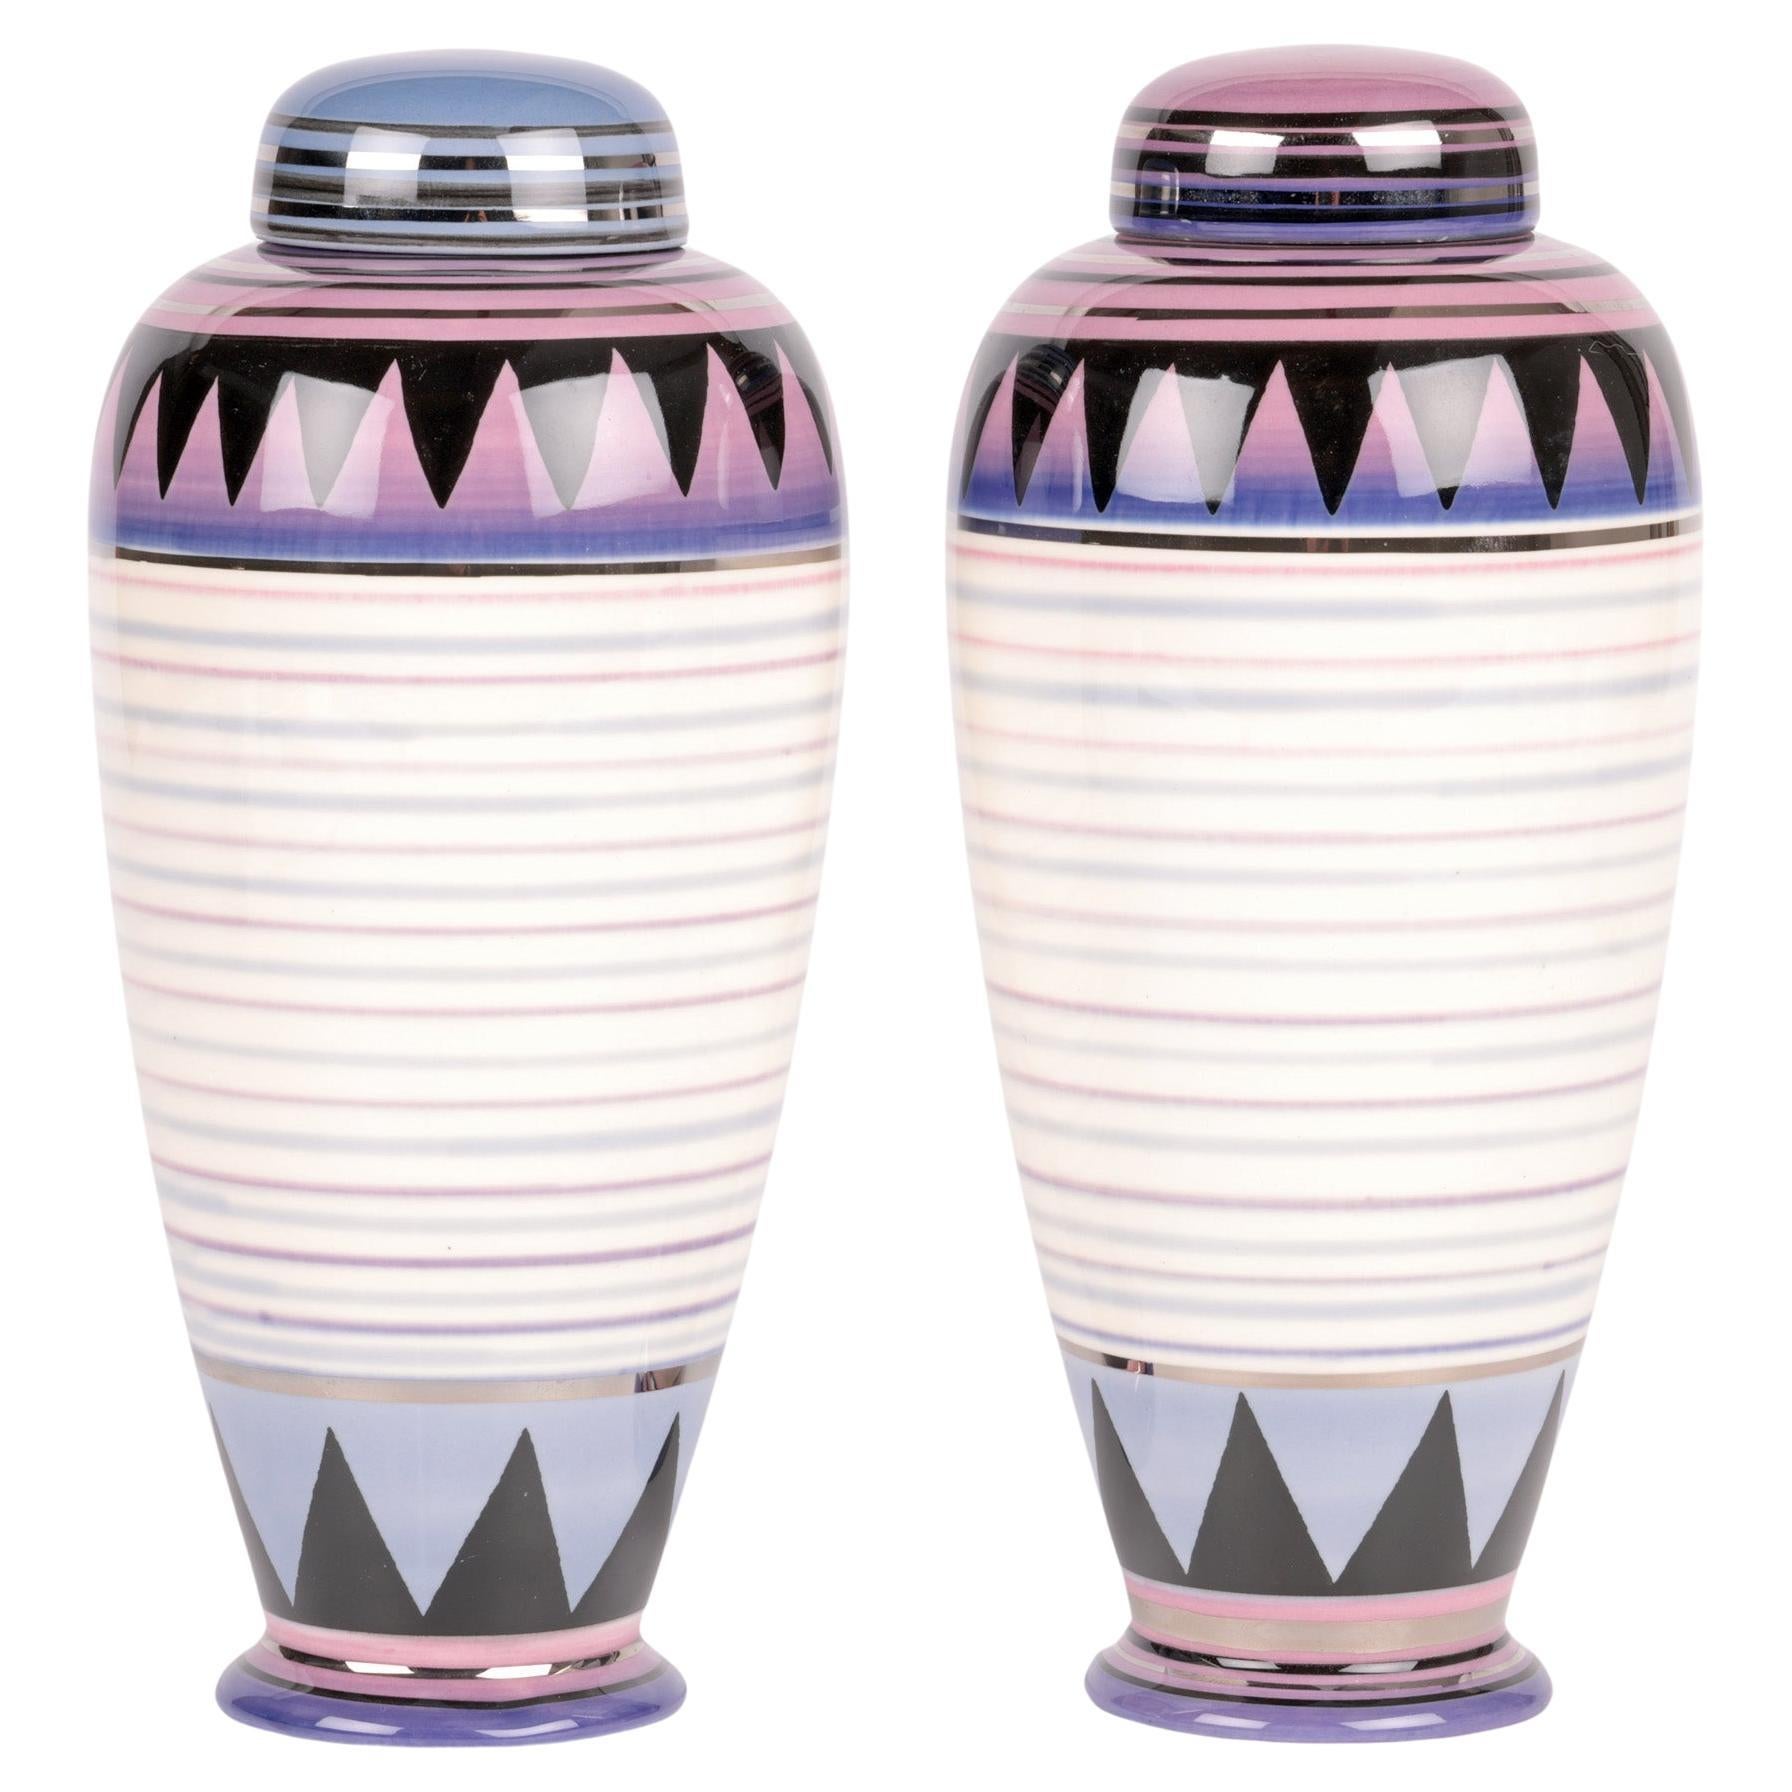 Moorland Pottery Pair Ceramic Lustre Lidded Vases   For Sale